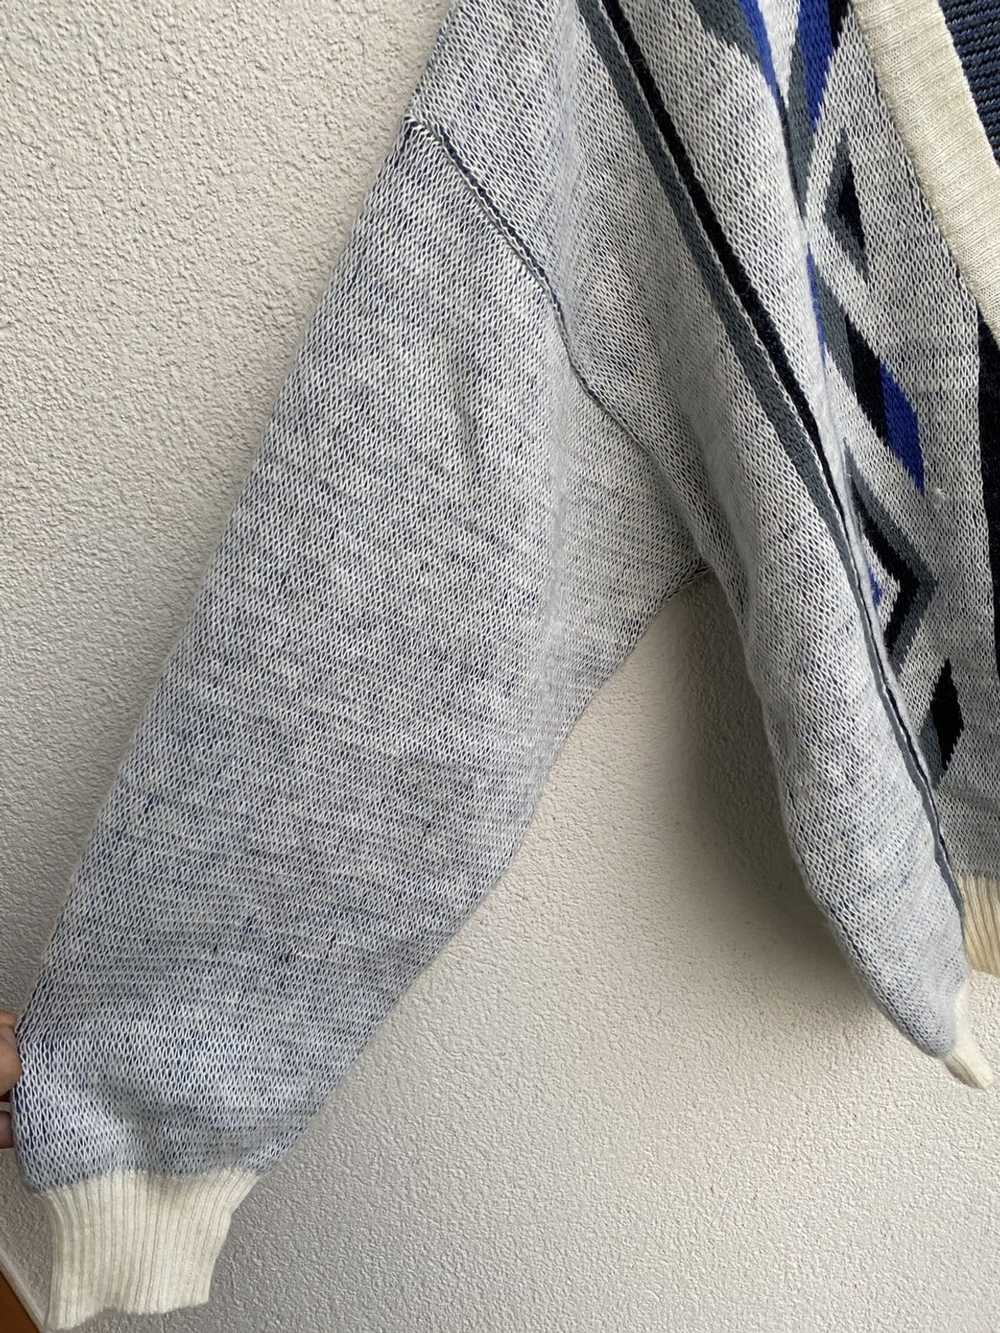 Yves Saint Laurent 80’s Wool YSL Cardigan Soft - image 12